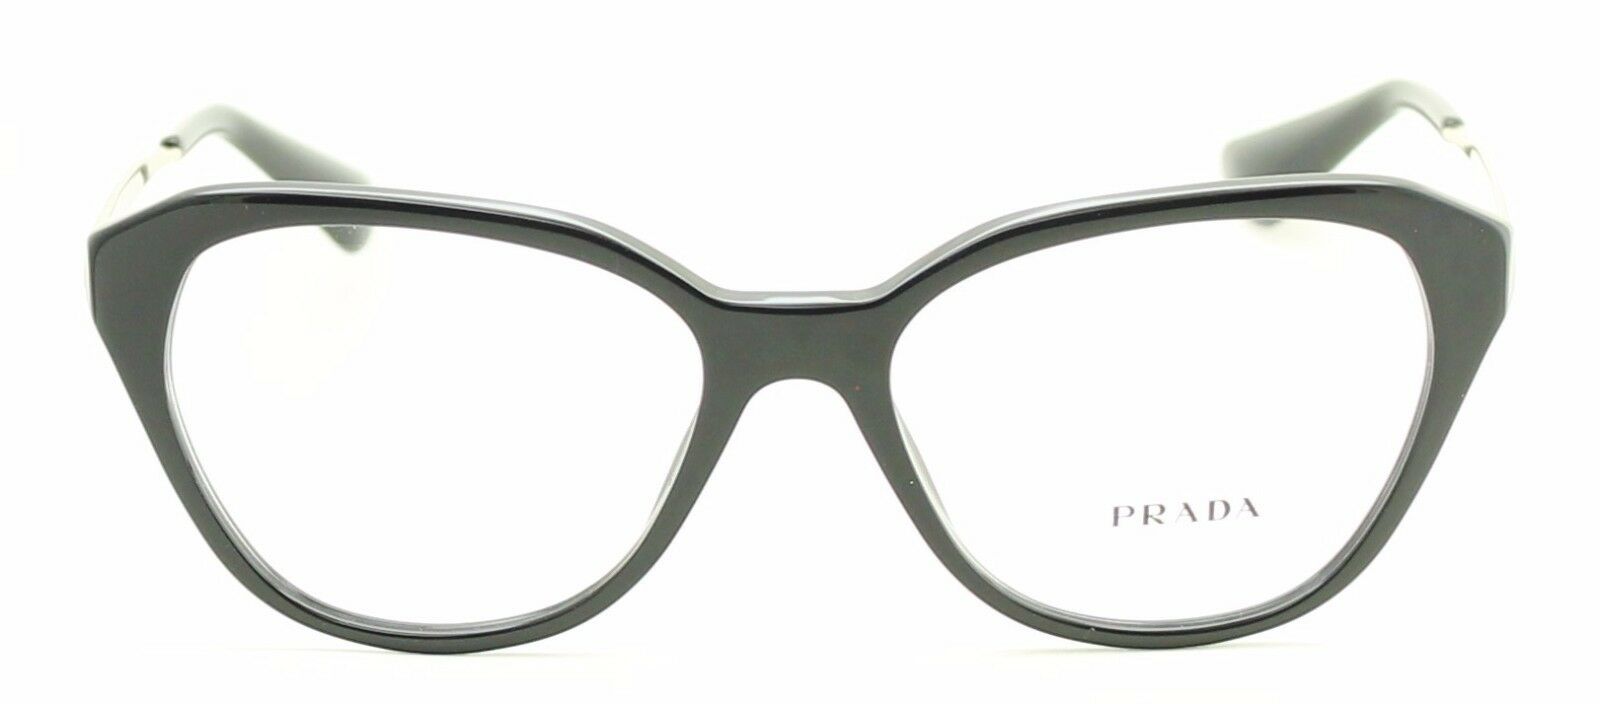 PRADA VPR 28S 1AB-1O1 52mm Eyewear FRAMES RX Optical Eyeglasses Glasses - Italy